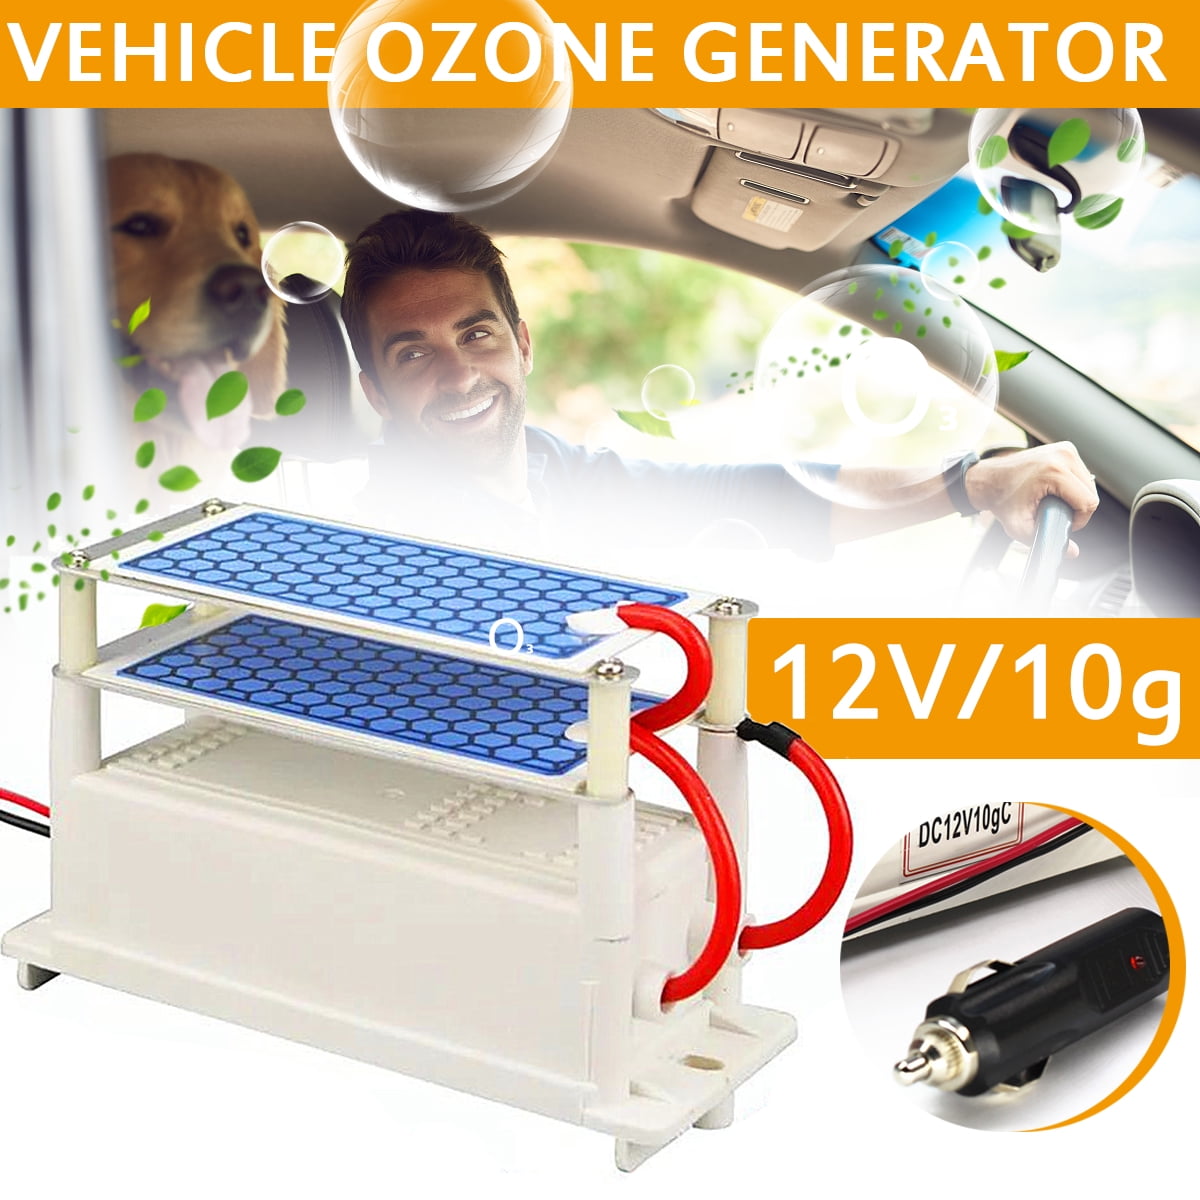 Ozone Generator DC12V 10g Car Purifier Ozonizador Ozonator Air Cleaner Ozon Generator Ozonizer Odor Removal | Canada